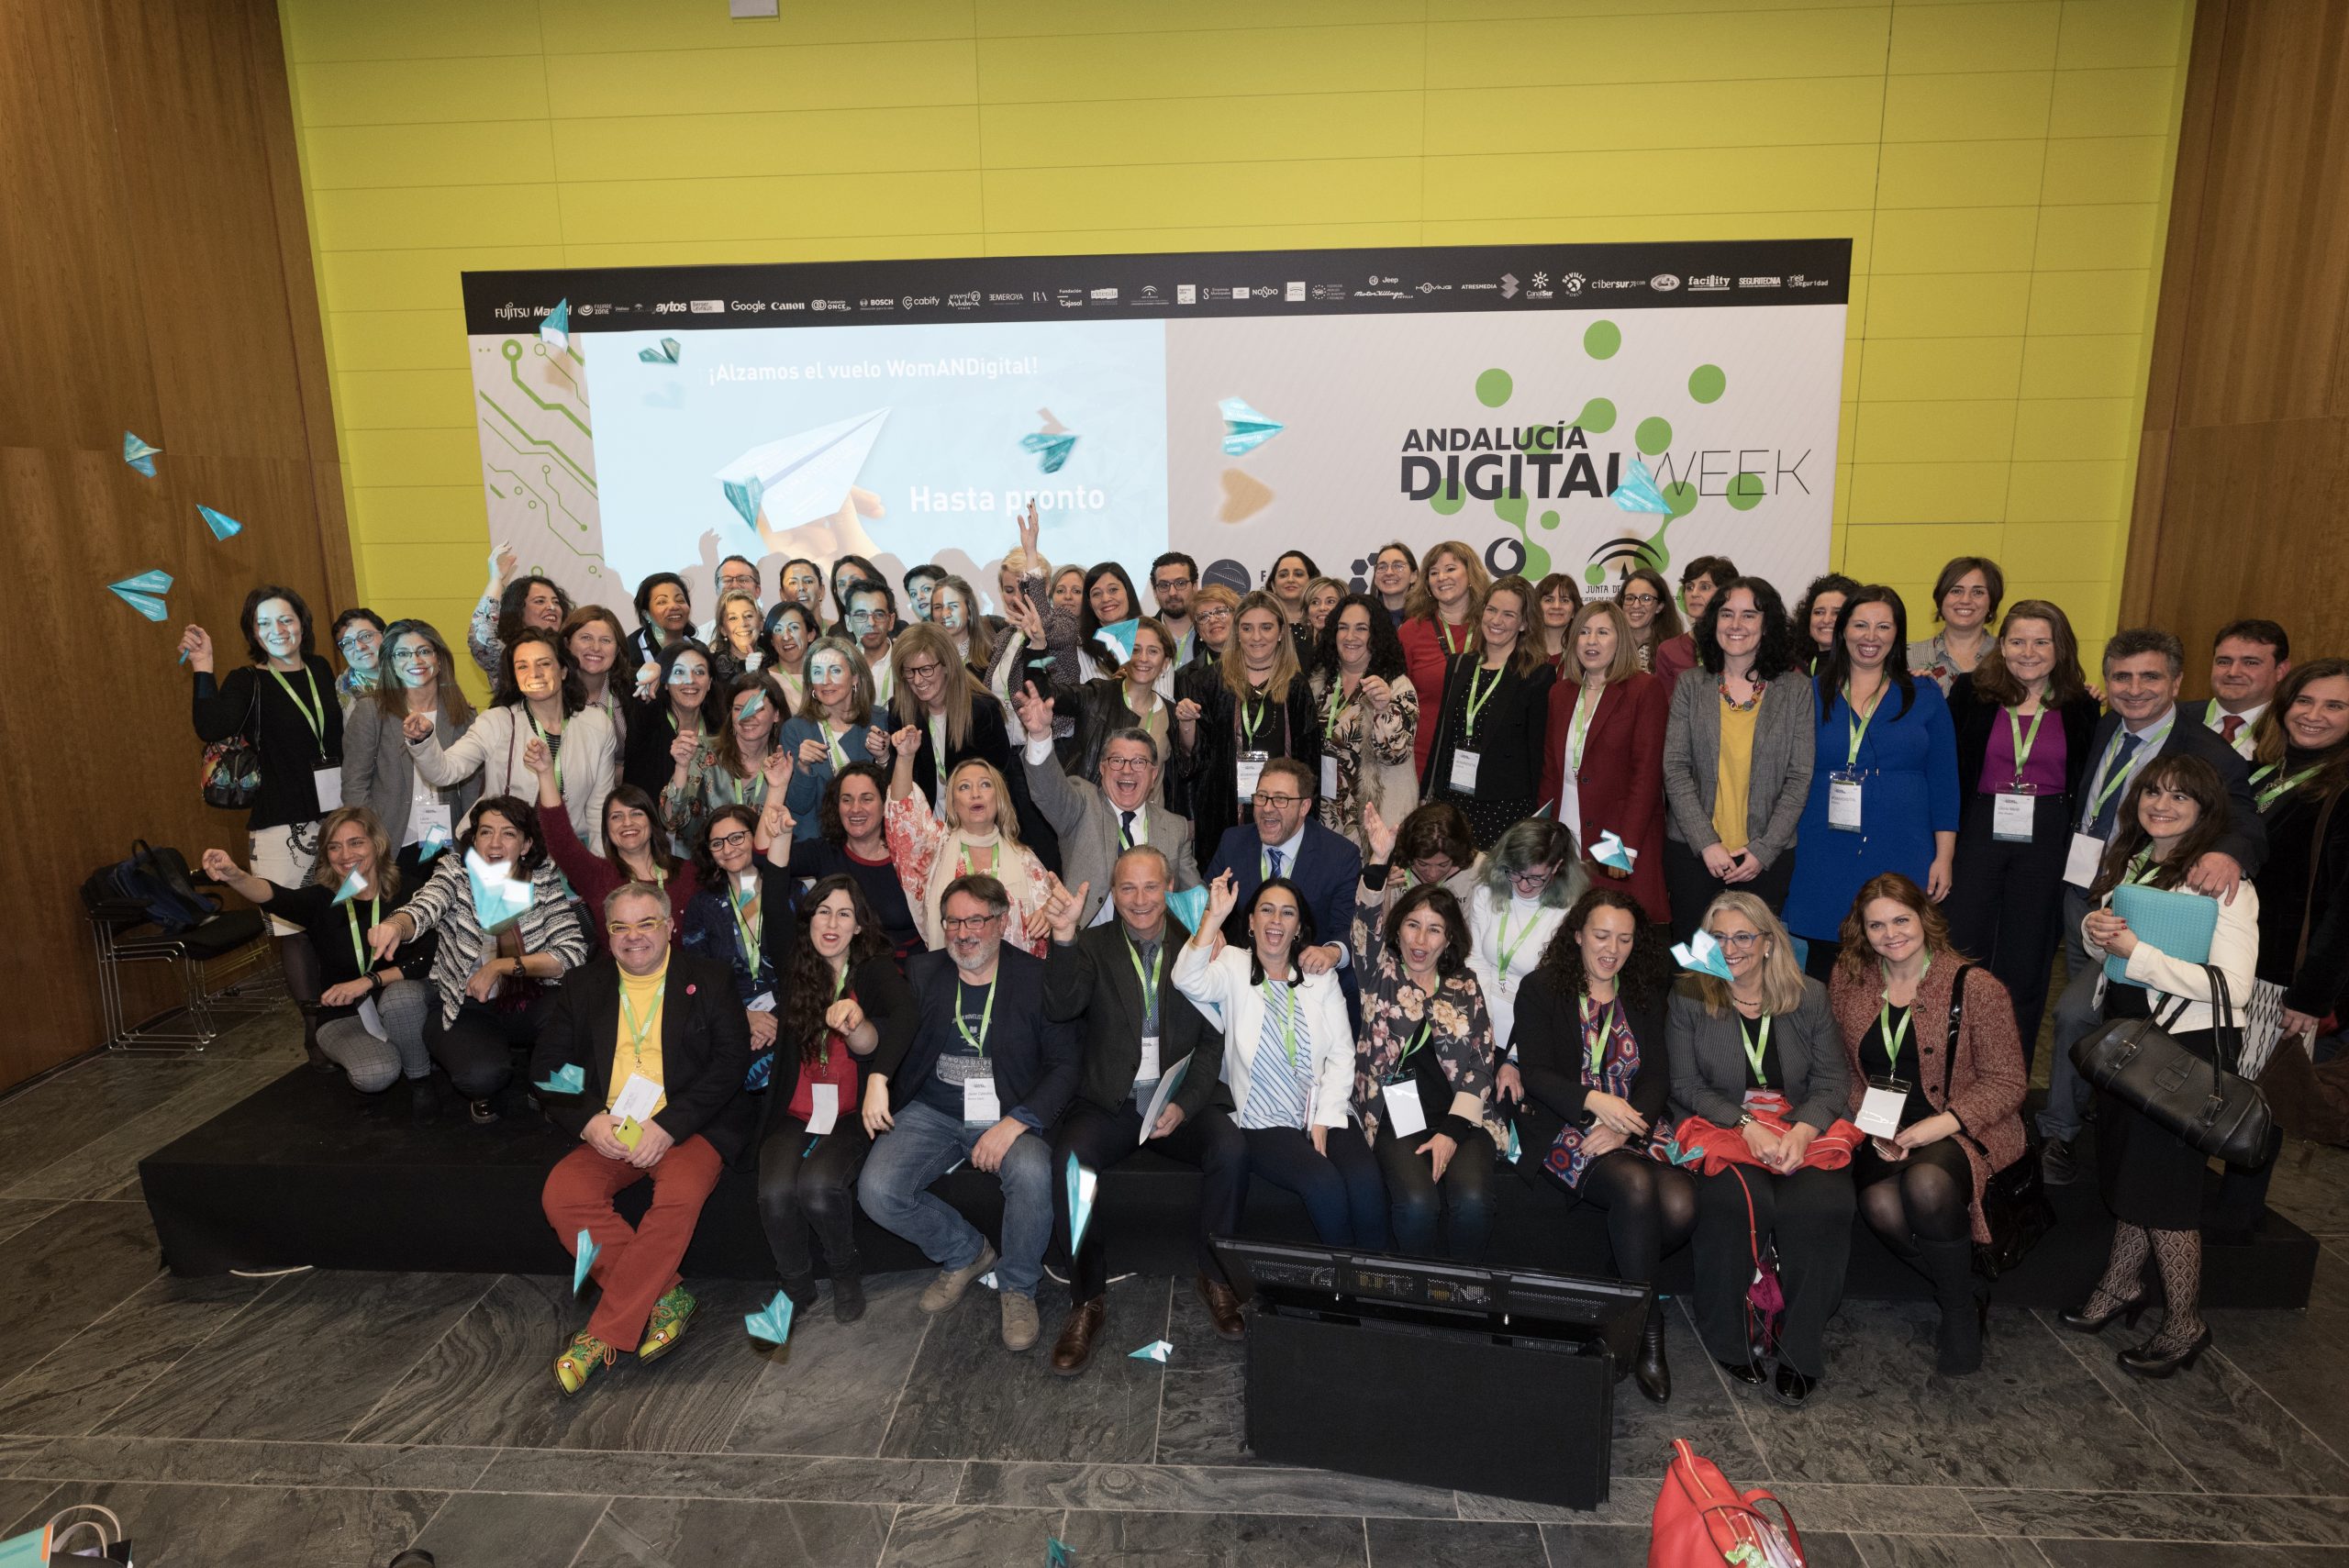 Participantes de la Jornada Womandigital posando ante un photocall del evento Andalucia Digital Week